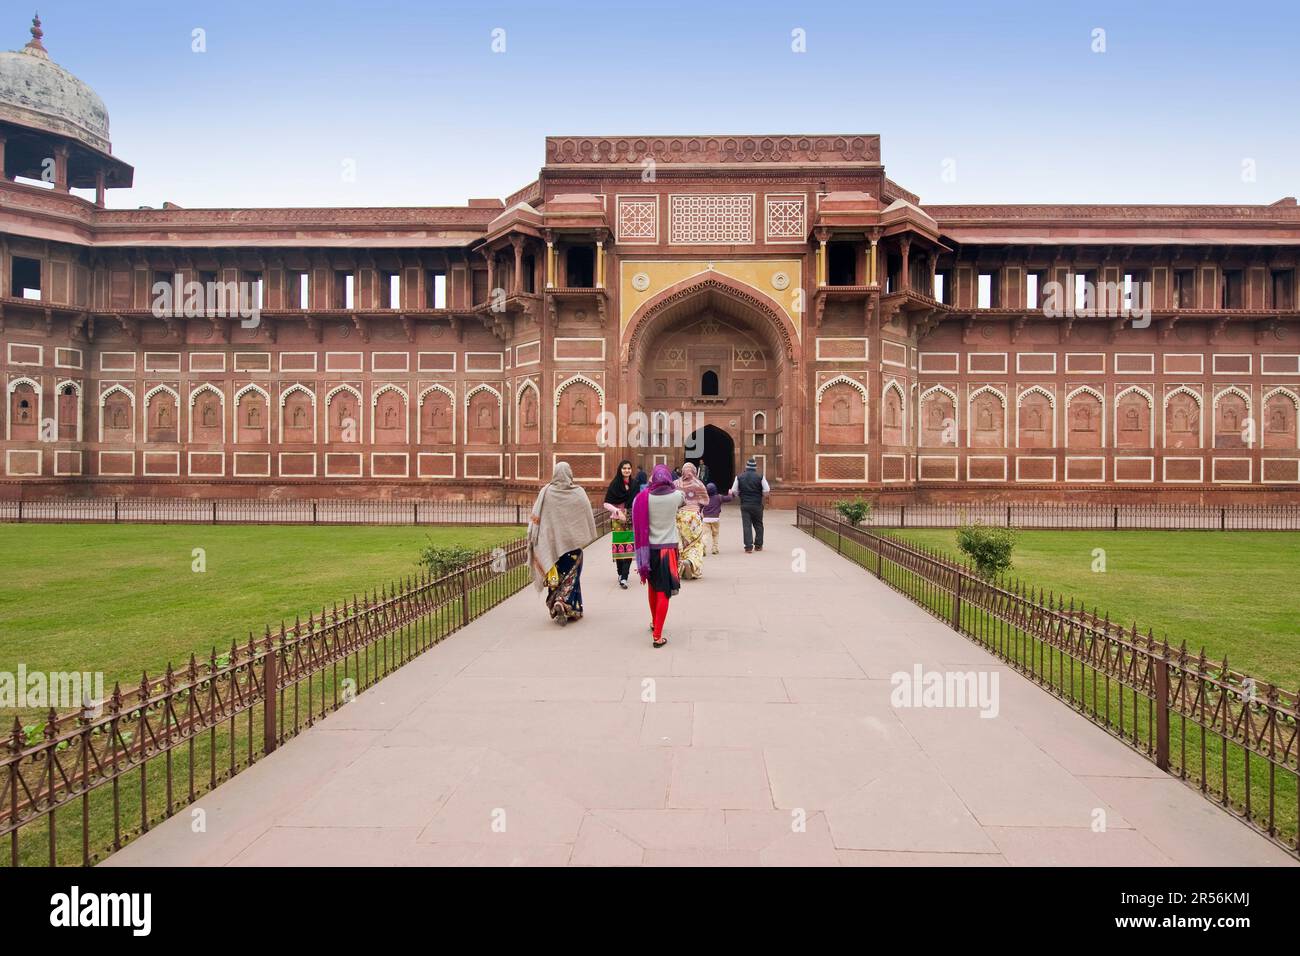 Taj Mahal. Agra. Uttar Pradesh. India Stock Photo